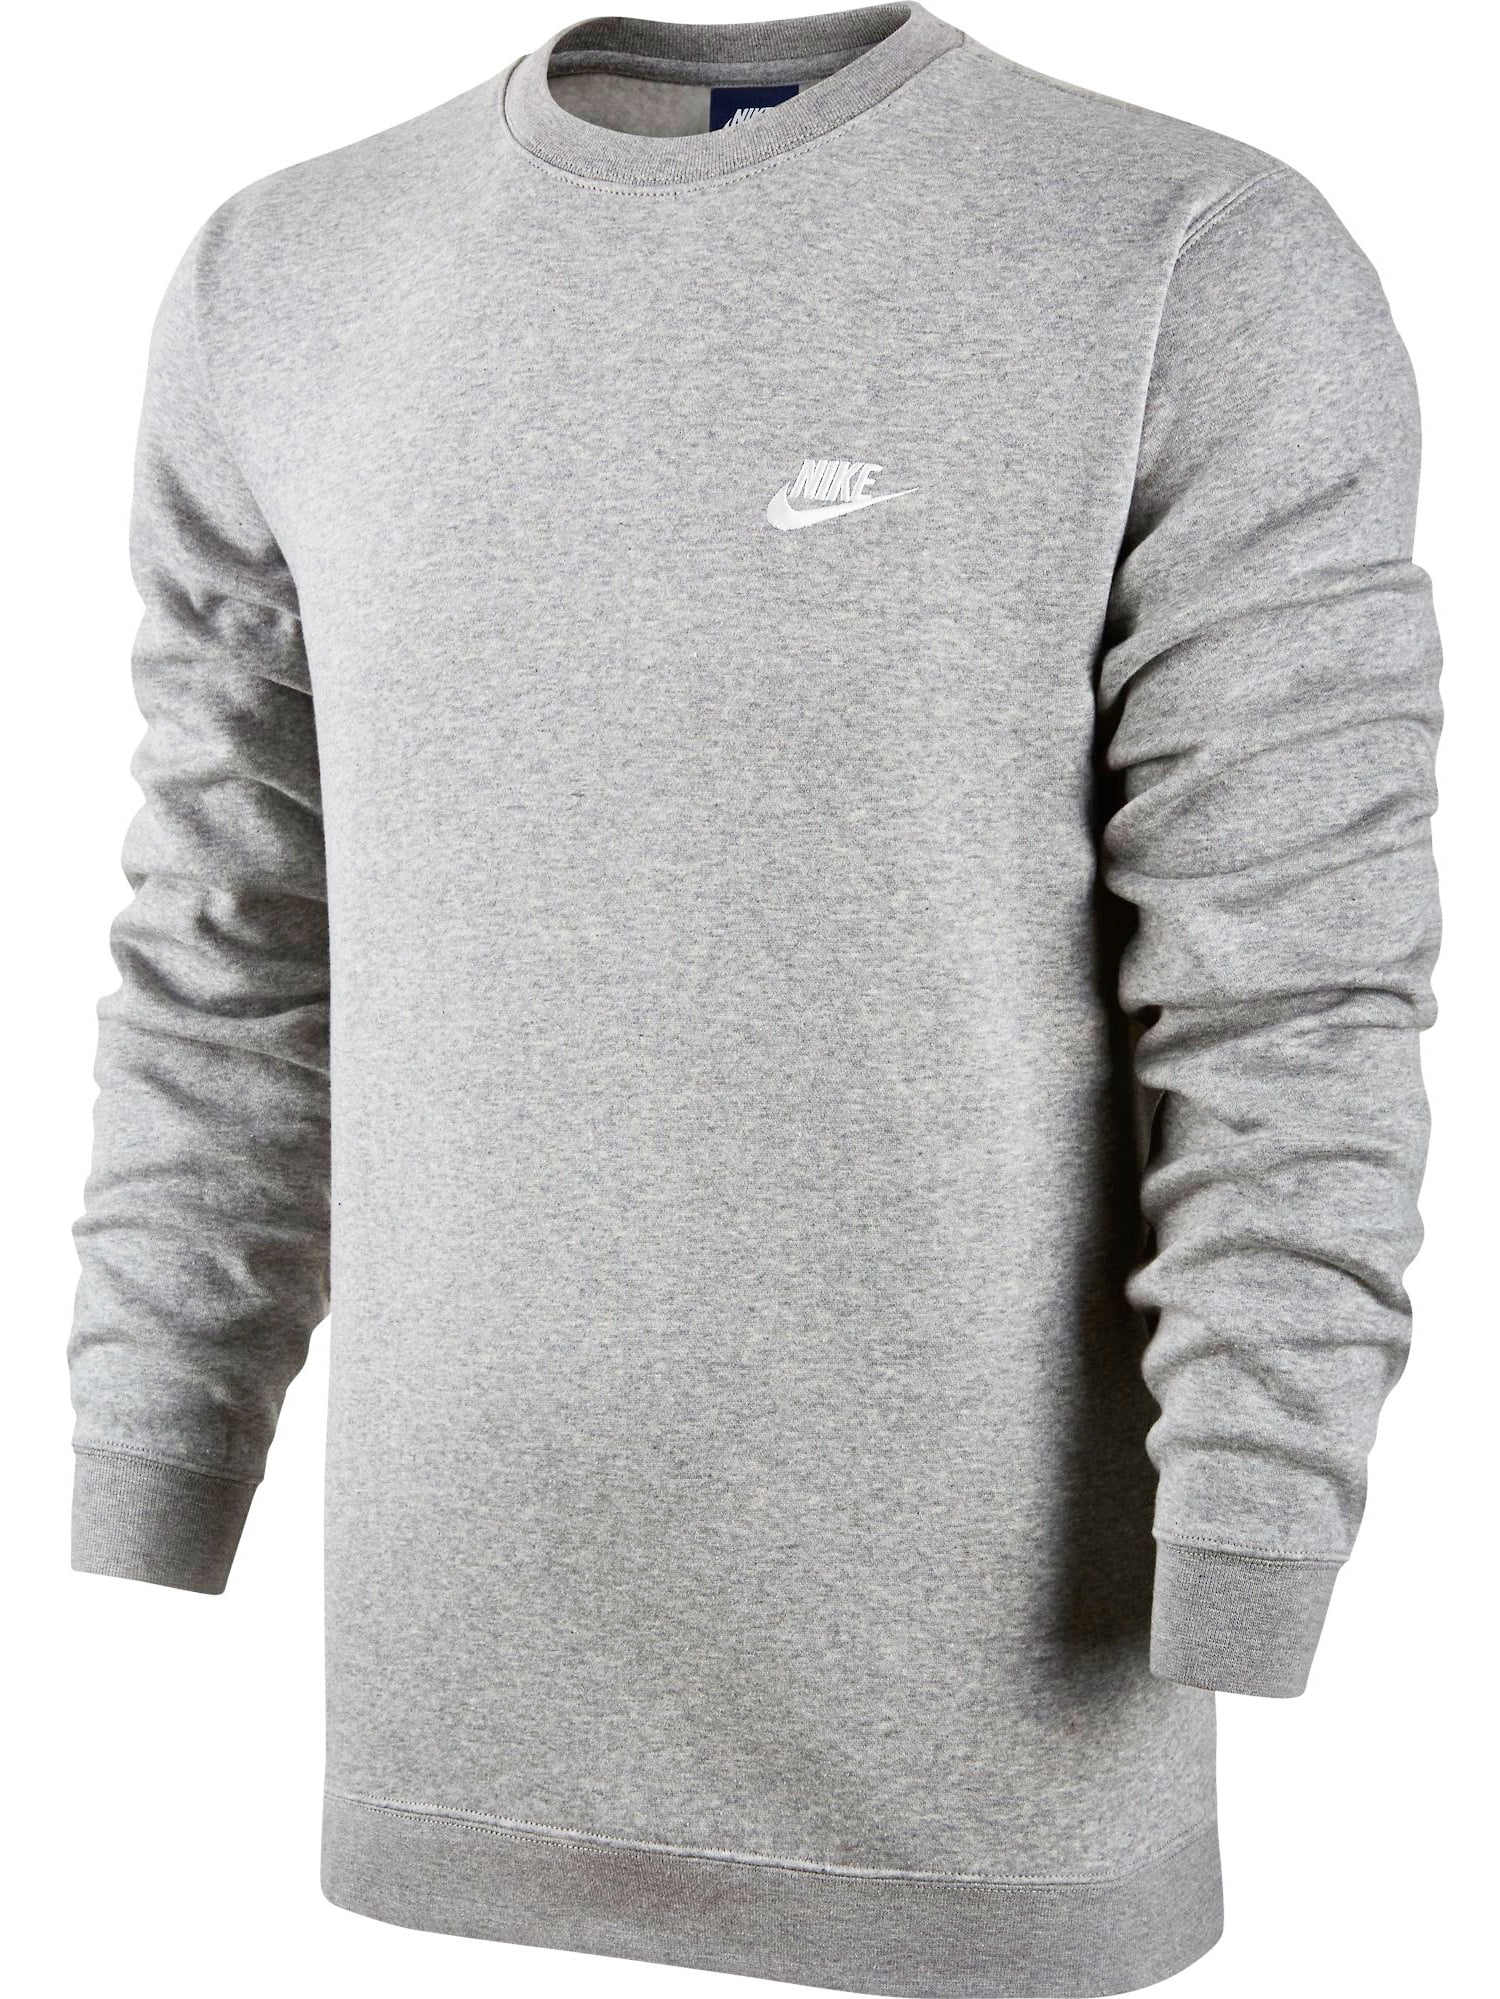 Nike Men's Dark Grey Heather / White Sportswear Crew Pullover - L ...